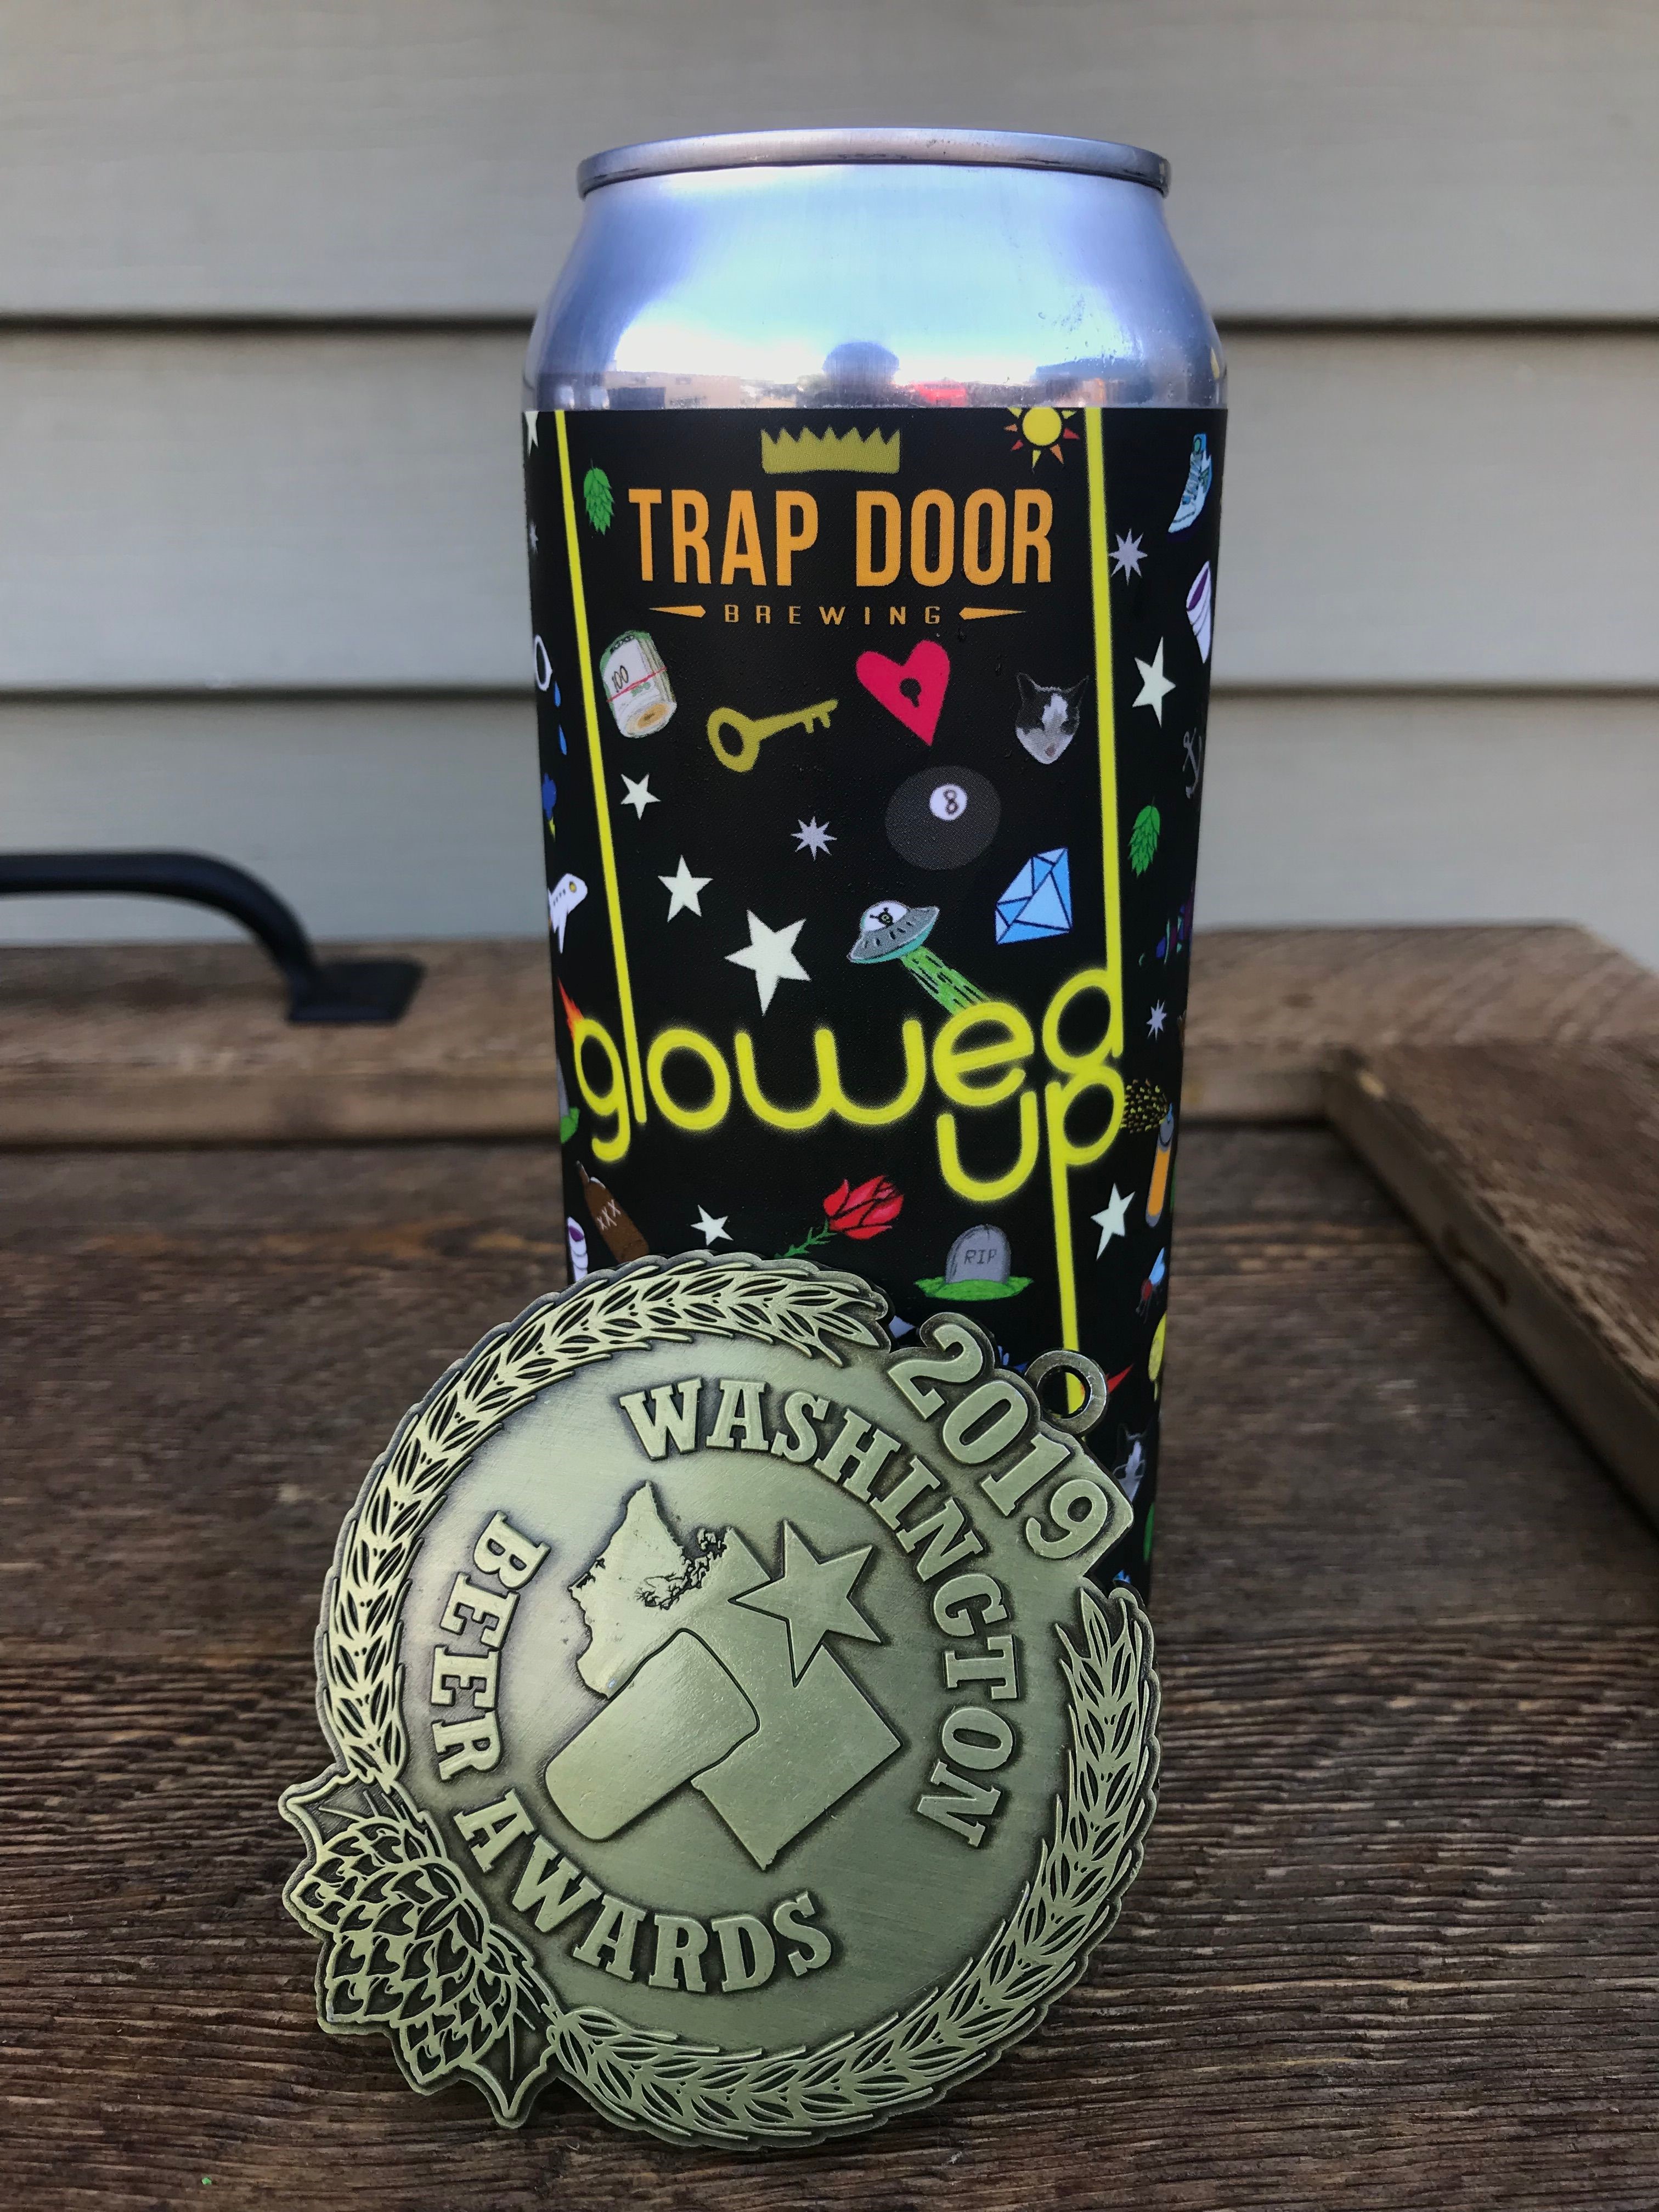 image of Trap Door Glowed Up courtesy of Trap Door Brewing